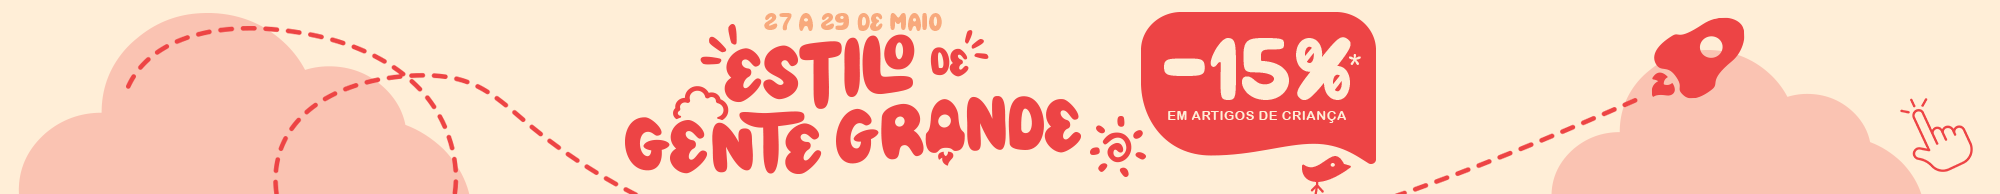 lettering promoo at -60% na marca nike em fundo cor-de-laranja_0